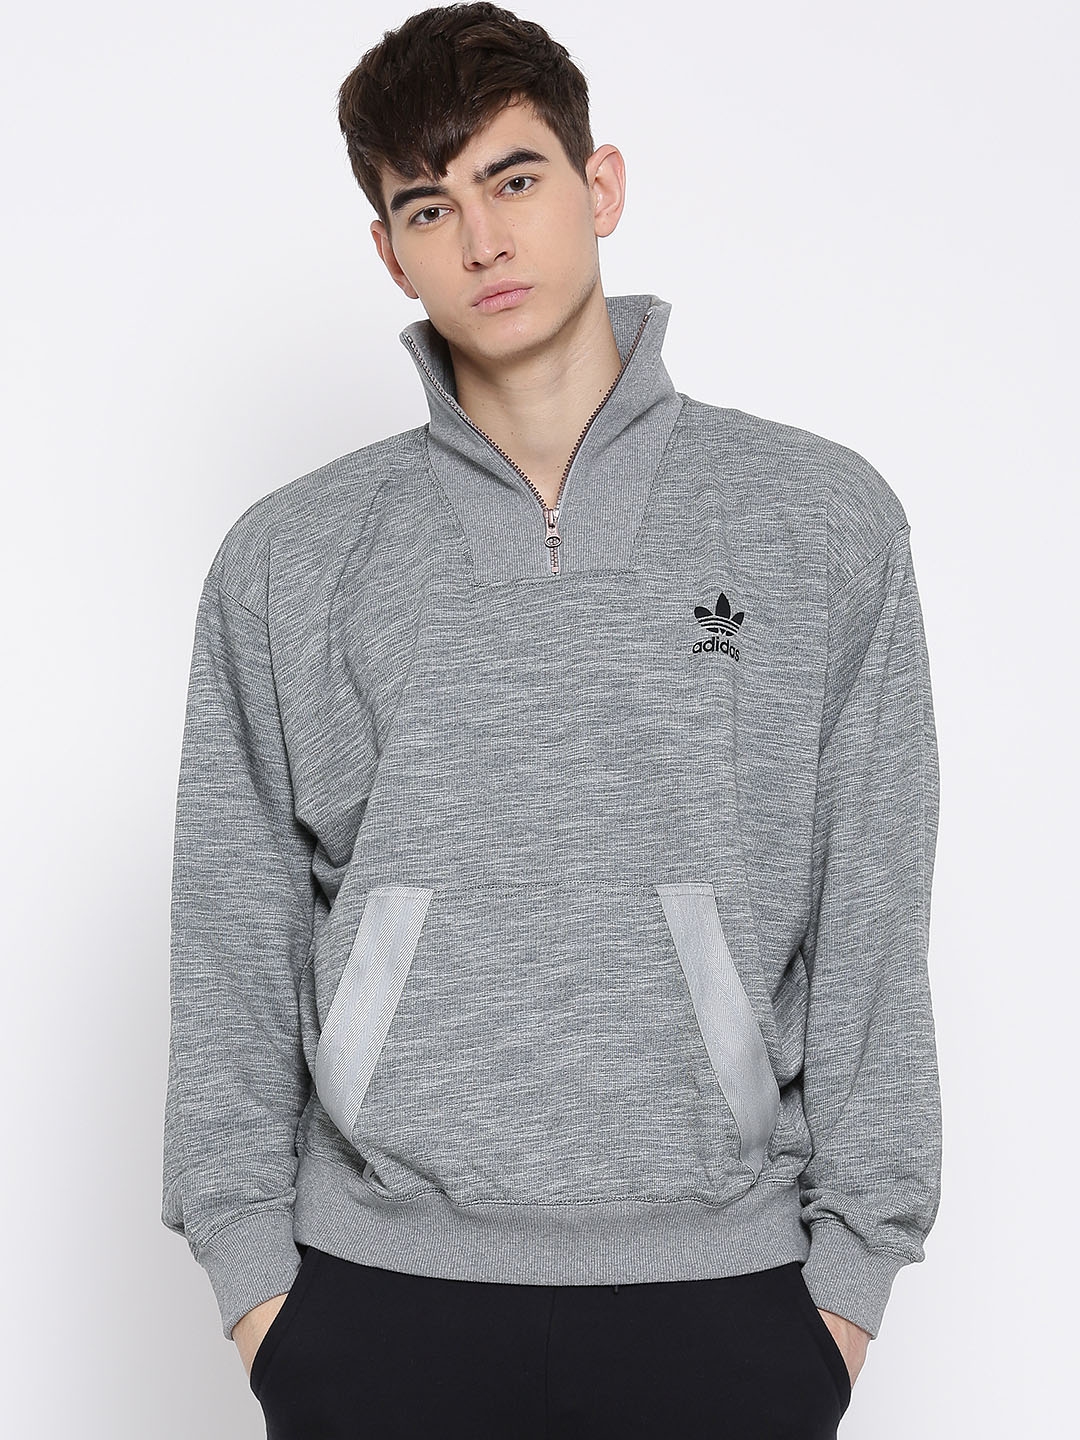 Buy ADIDAS Originals Grey Melange Noize R Sweatshirt - Sweatshirts for